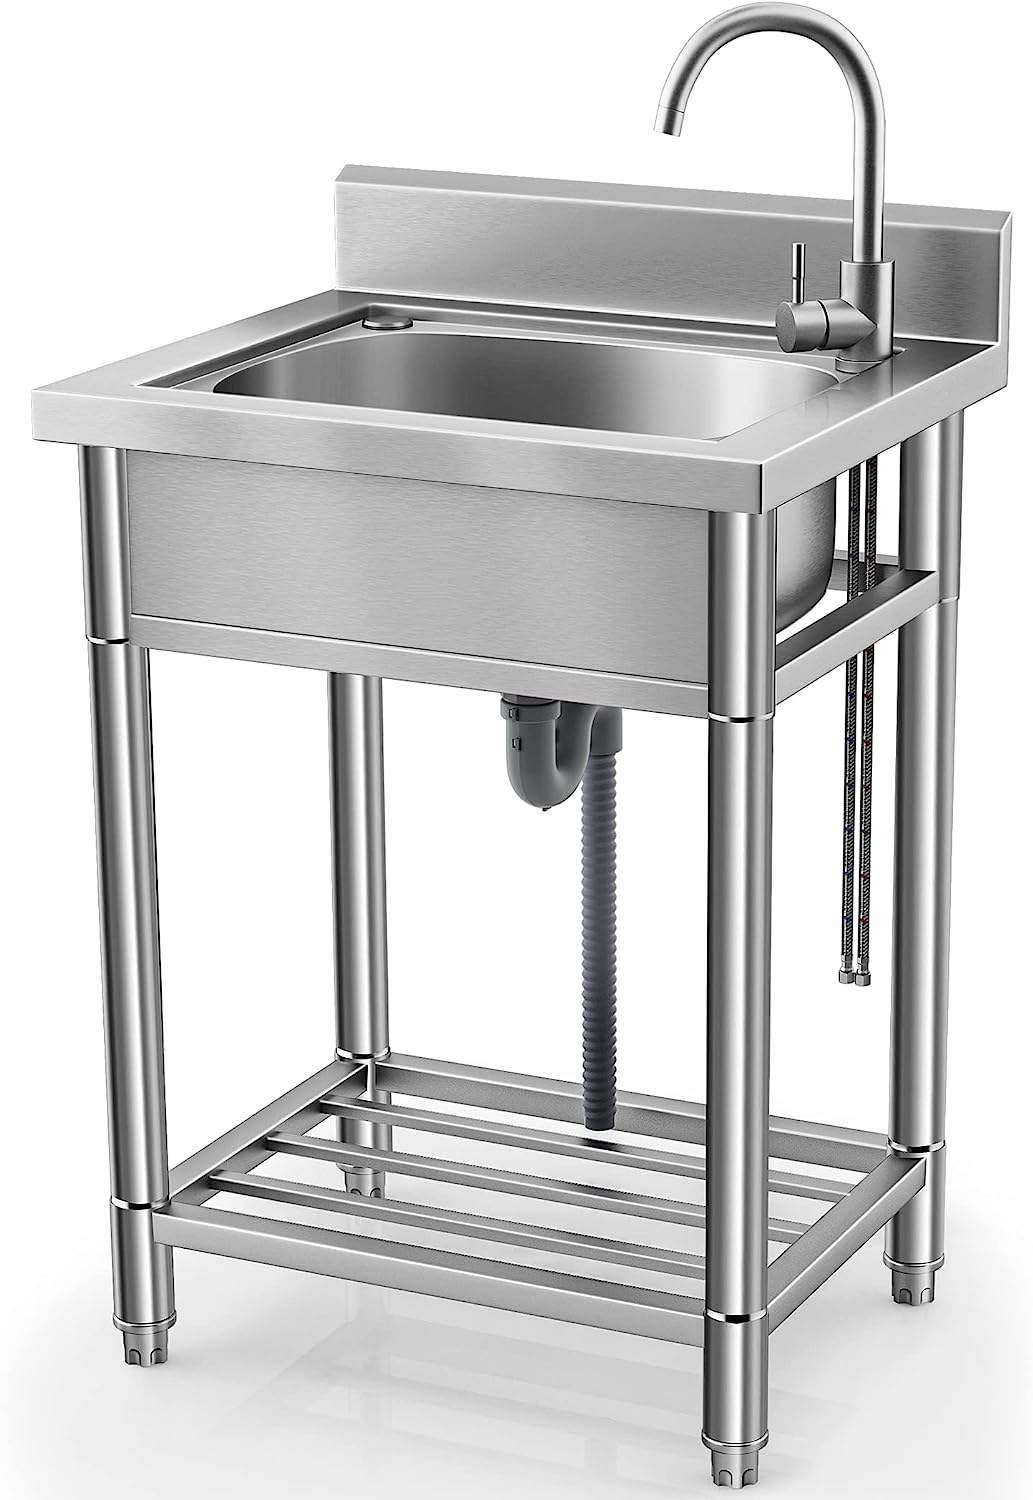 Utility Sink Free Standing Single Bowl Kitchen Sink [...]